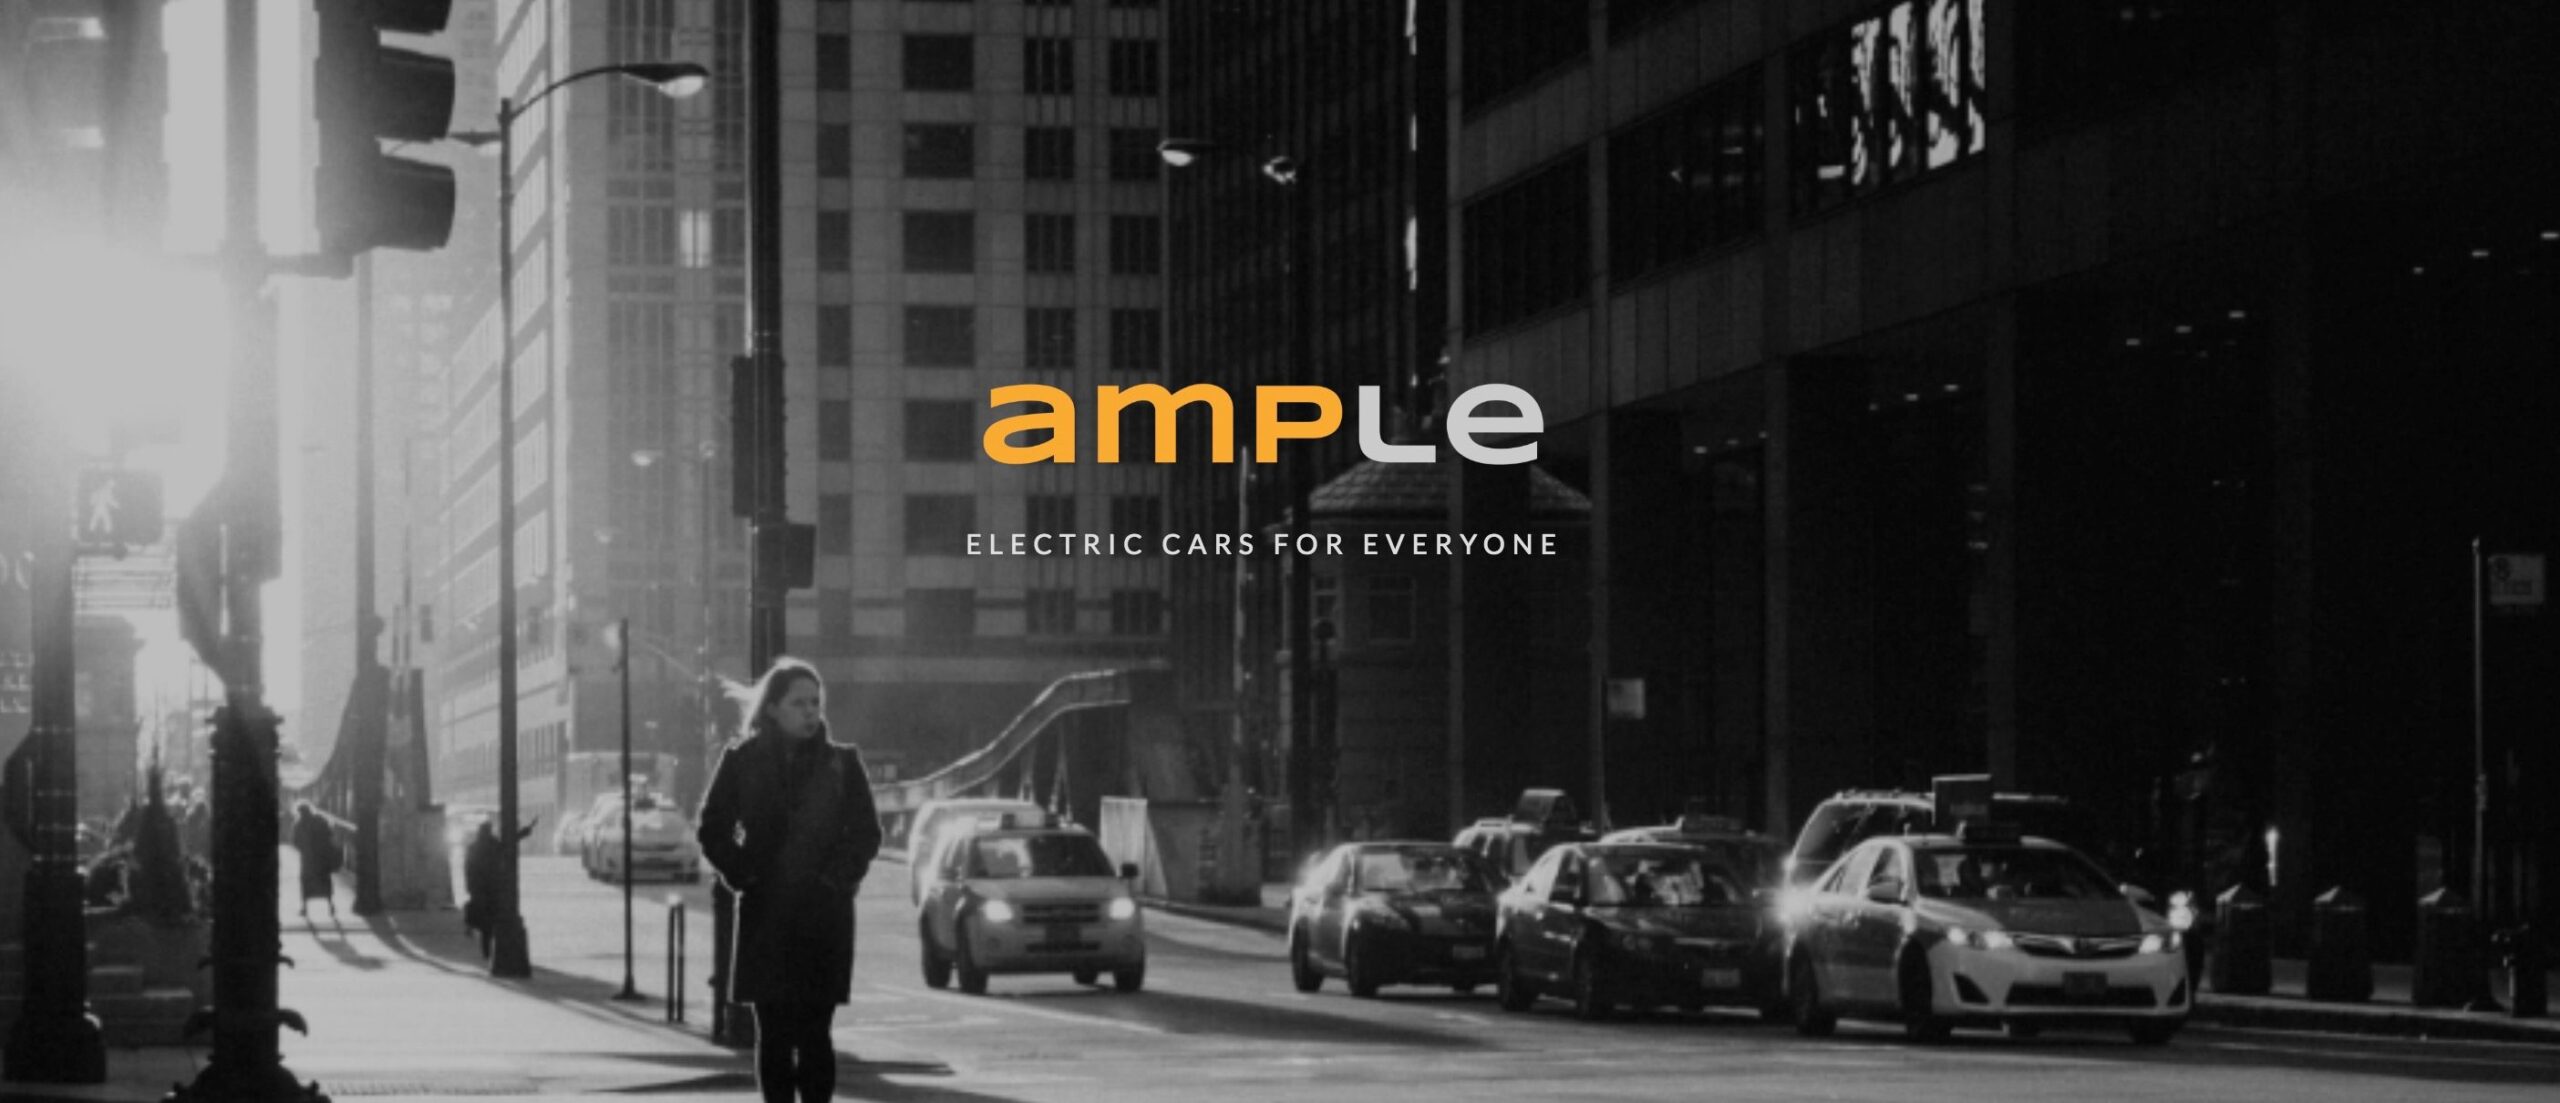 Electric Vehicle Battery Startup Ample Raises 160 Million EV Update